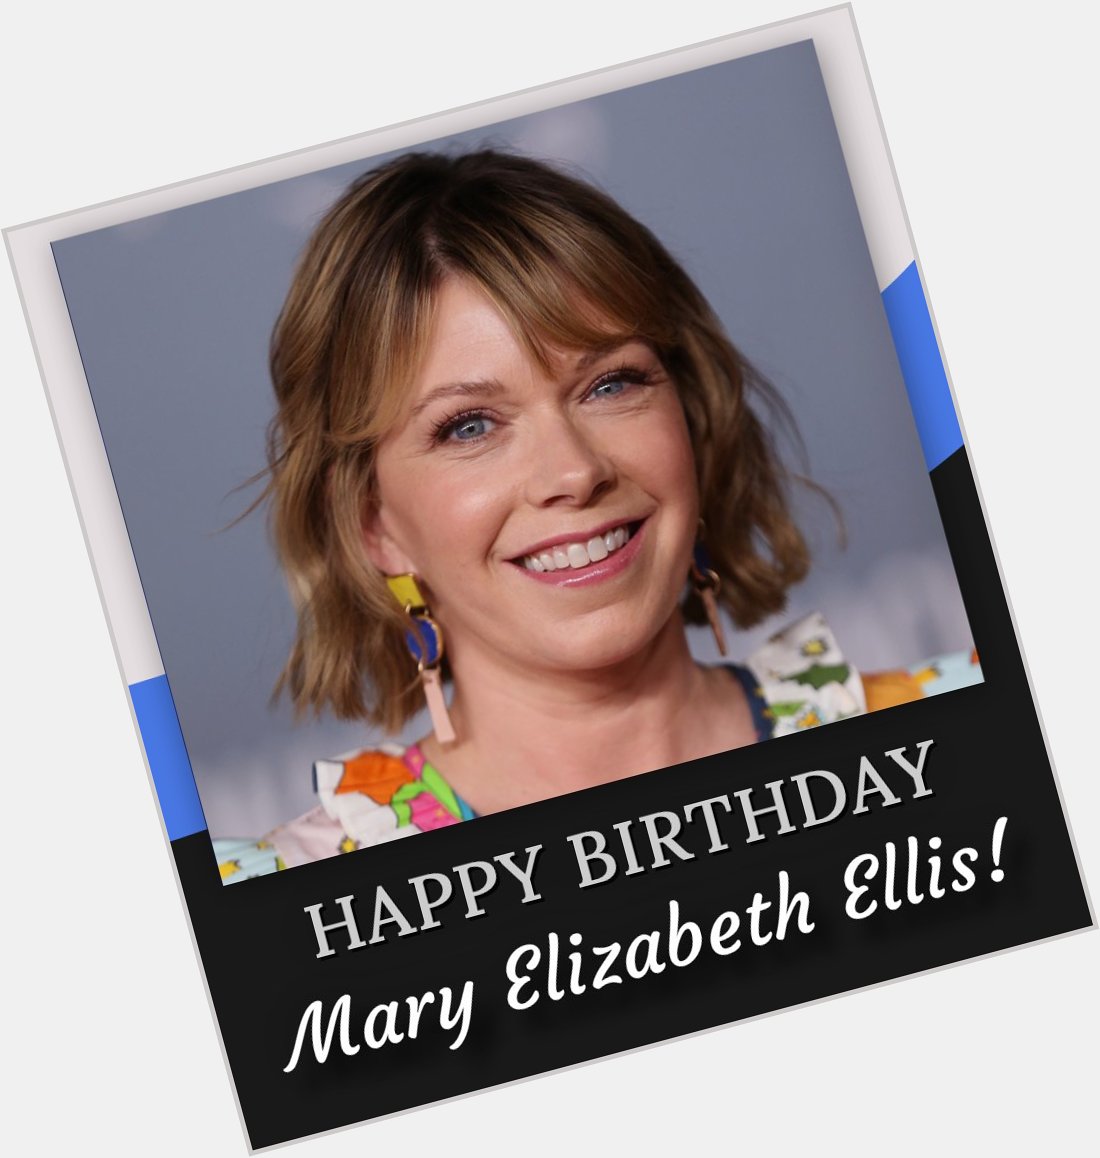 Happy birthday, Mary Elizabeth Ellis! 